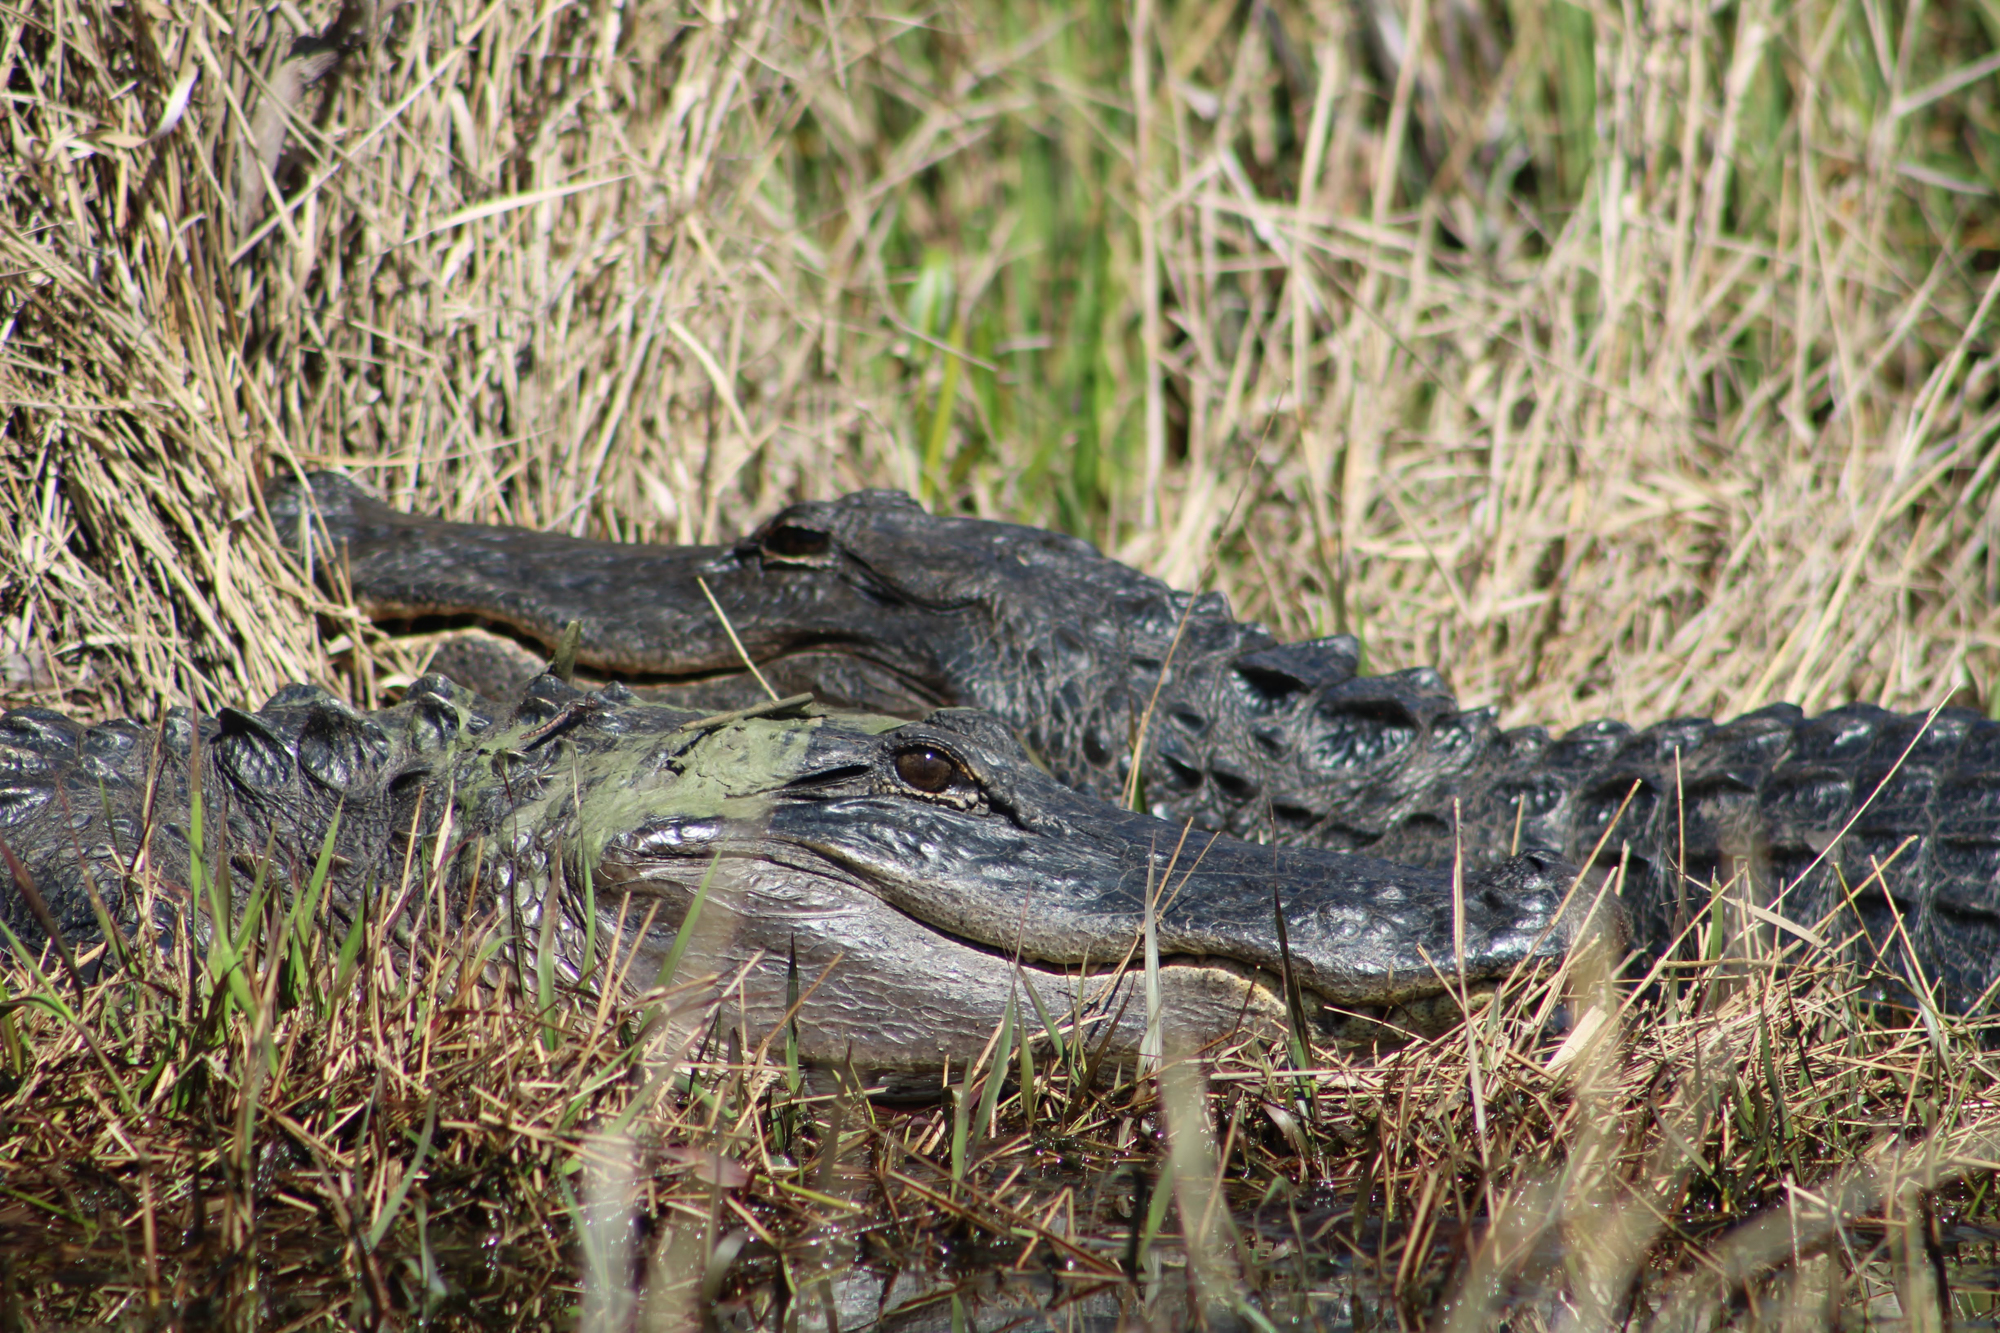 A pair of gators sit in the sun in a Georgia swamp.